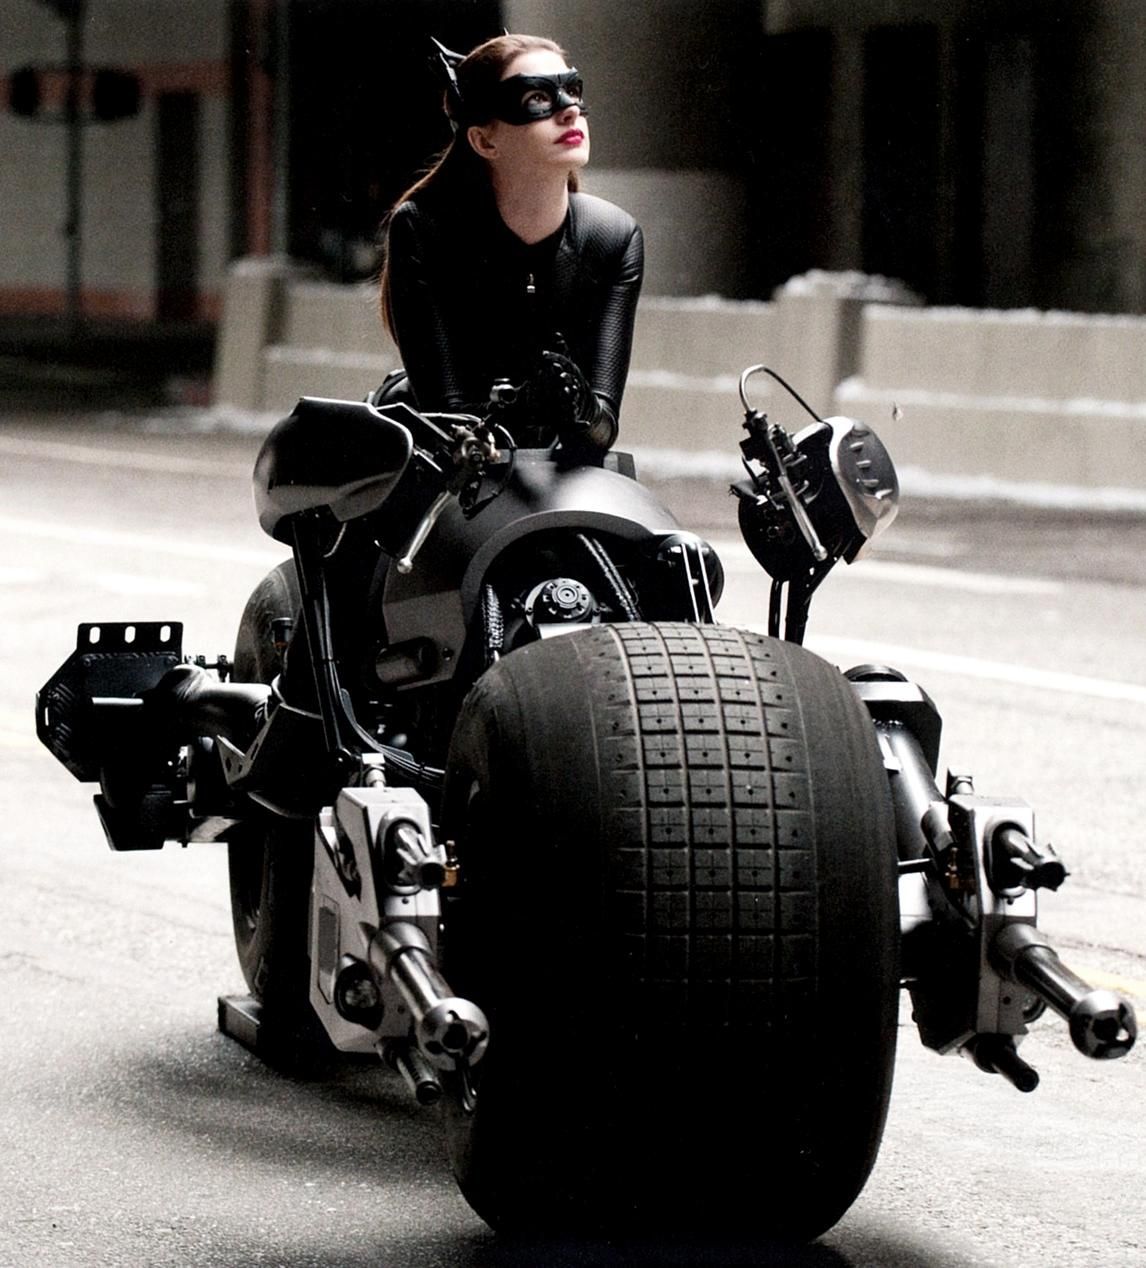 Cat Woman on Batman's motorcycle